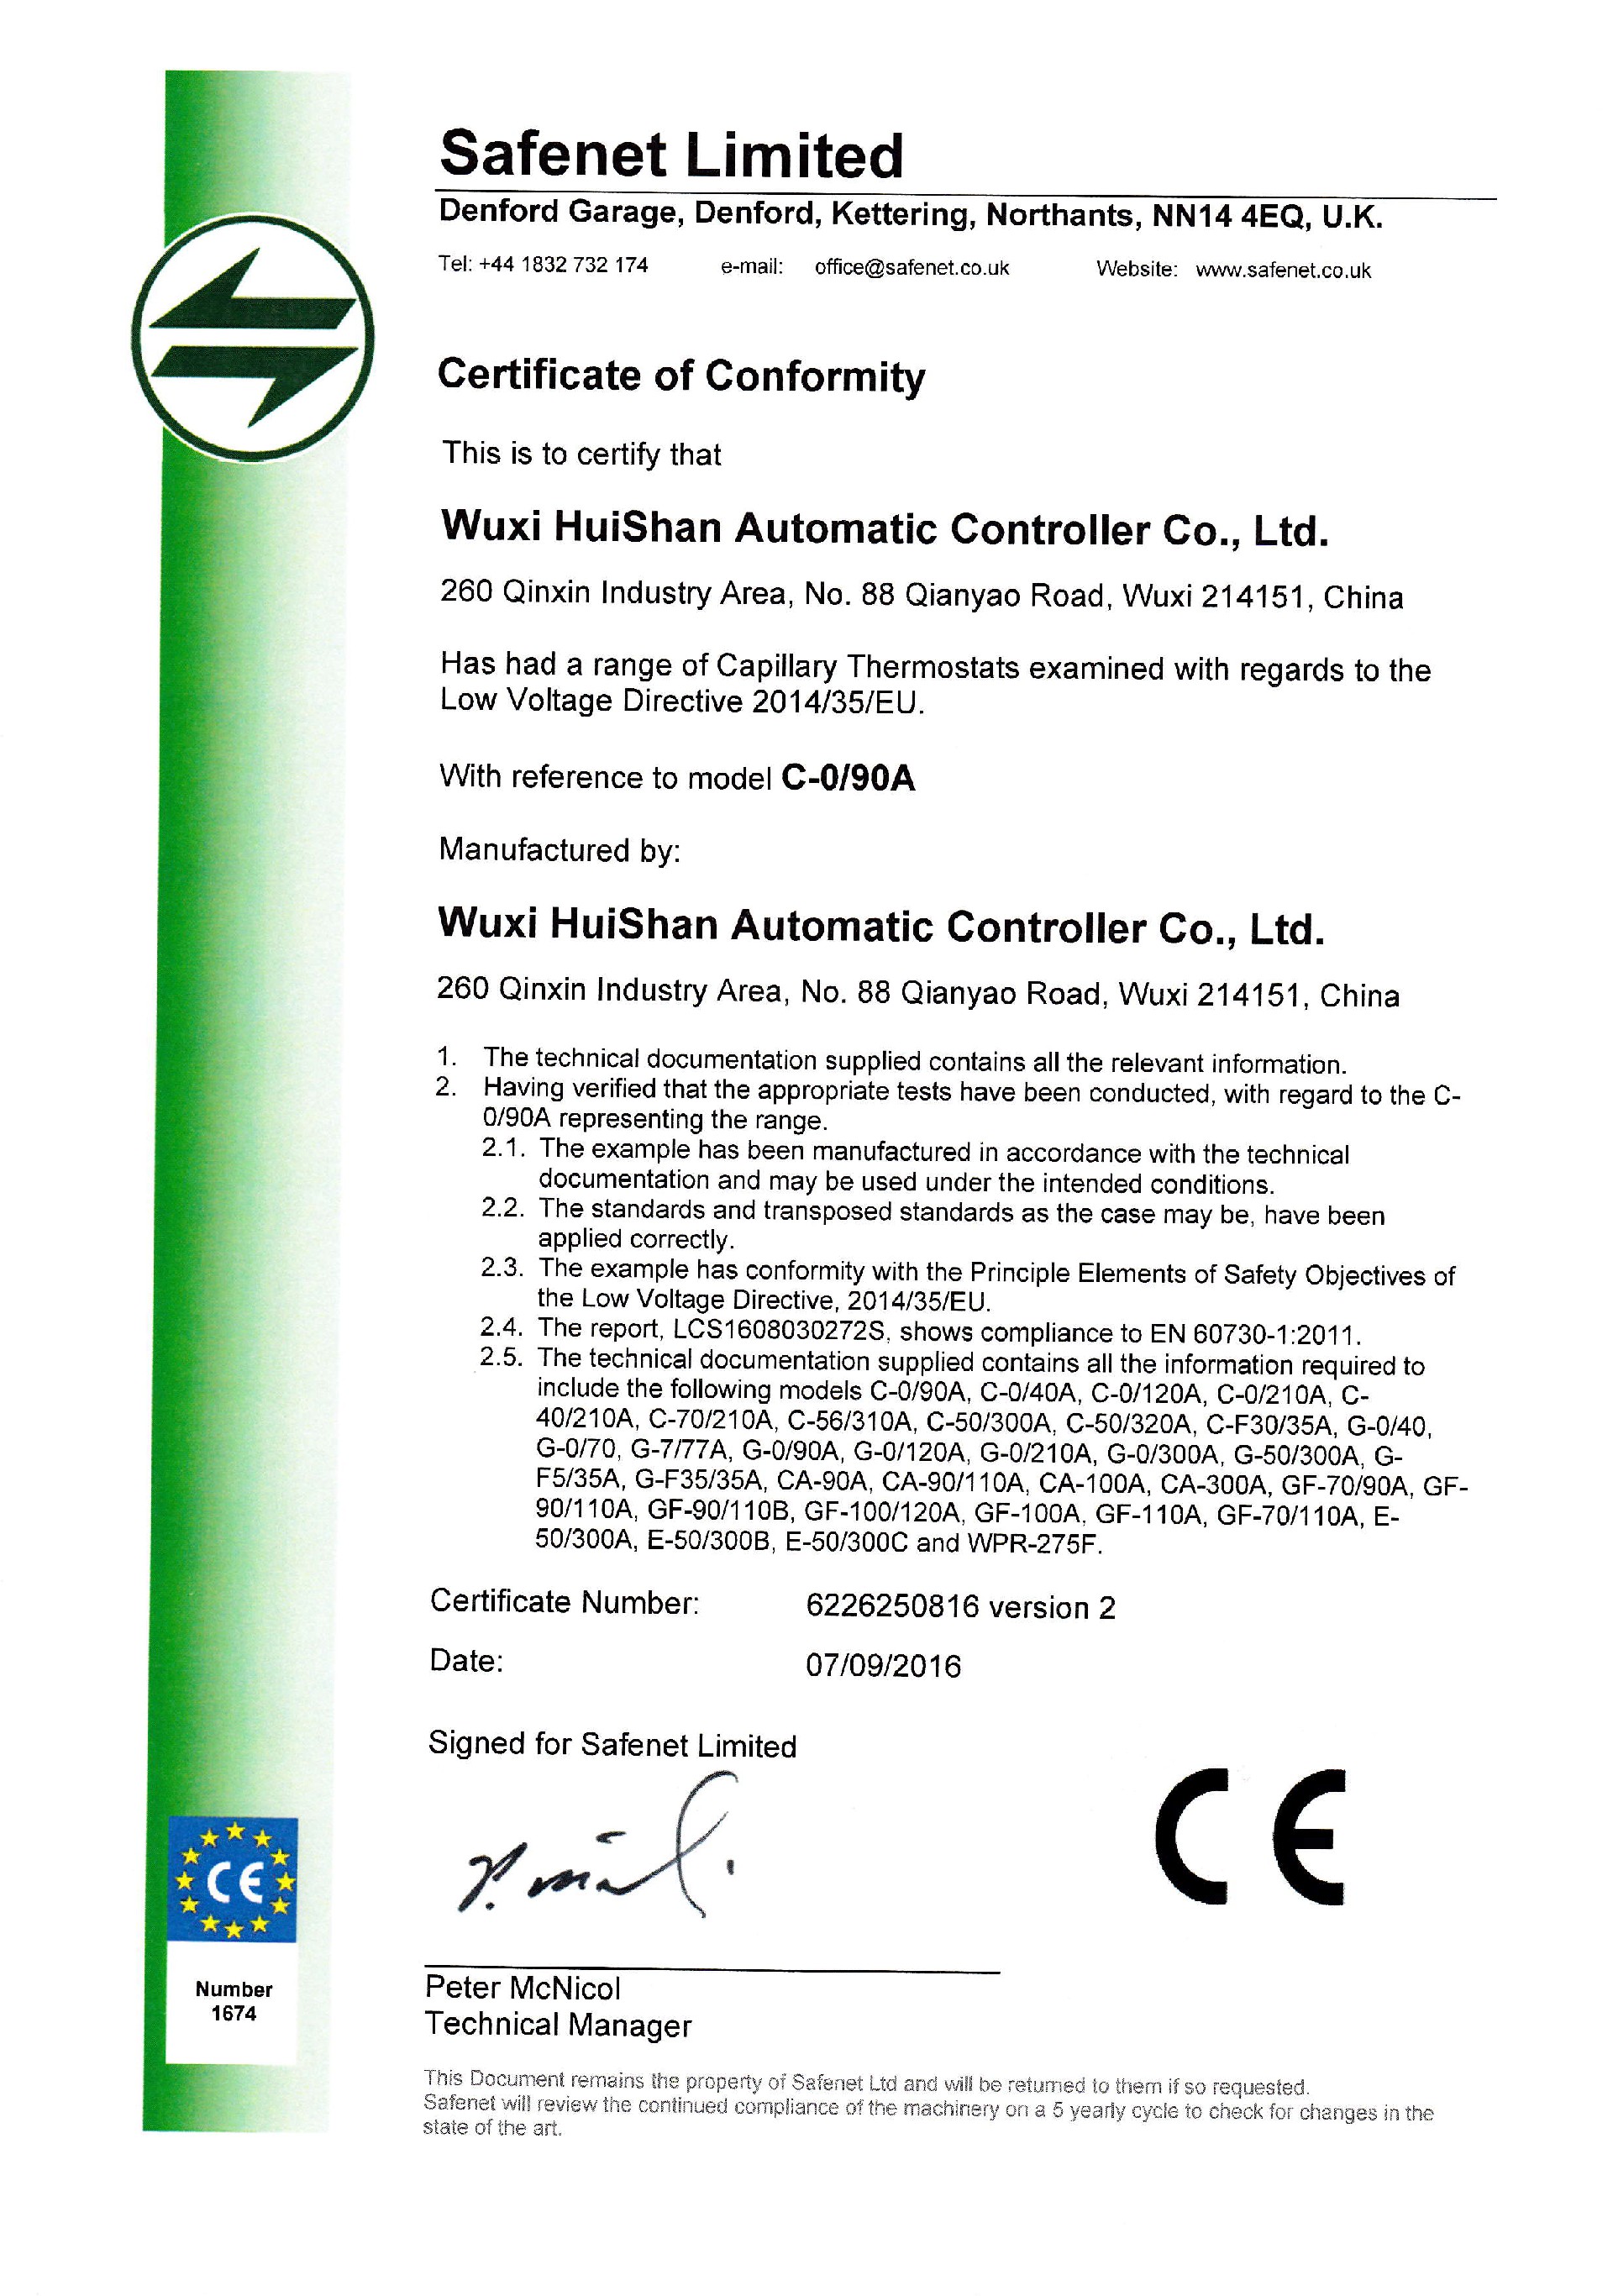 6226250816 - C-0`90A Capillary Thermostat LVD Certificate v2.jpg